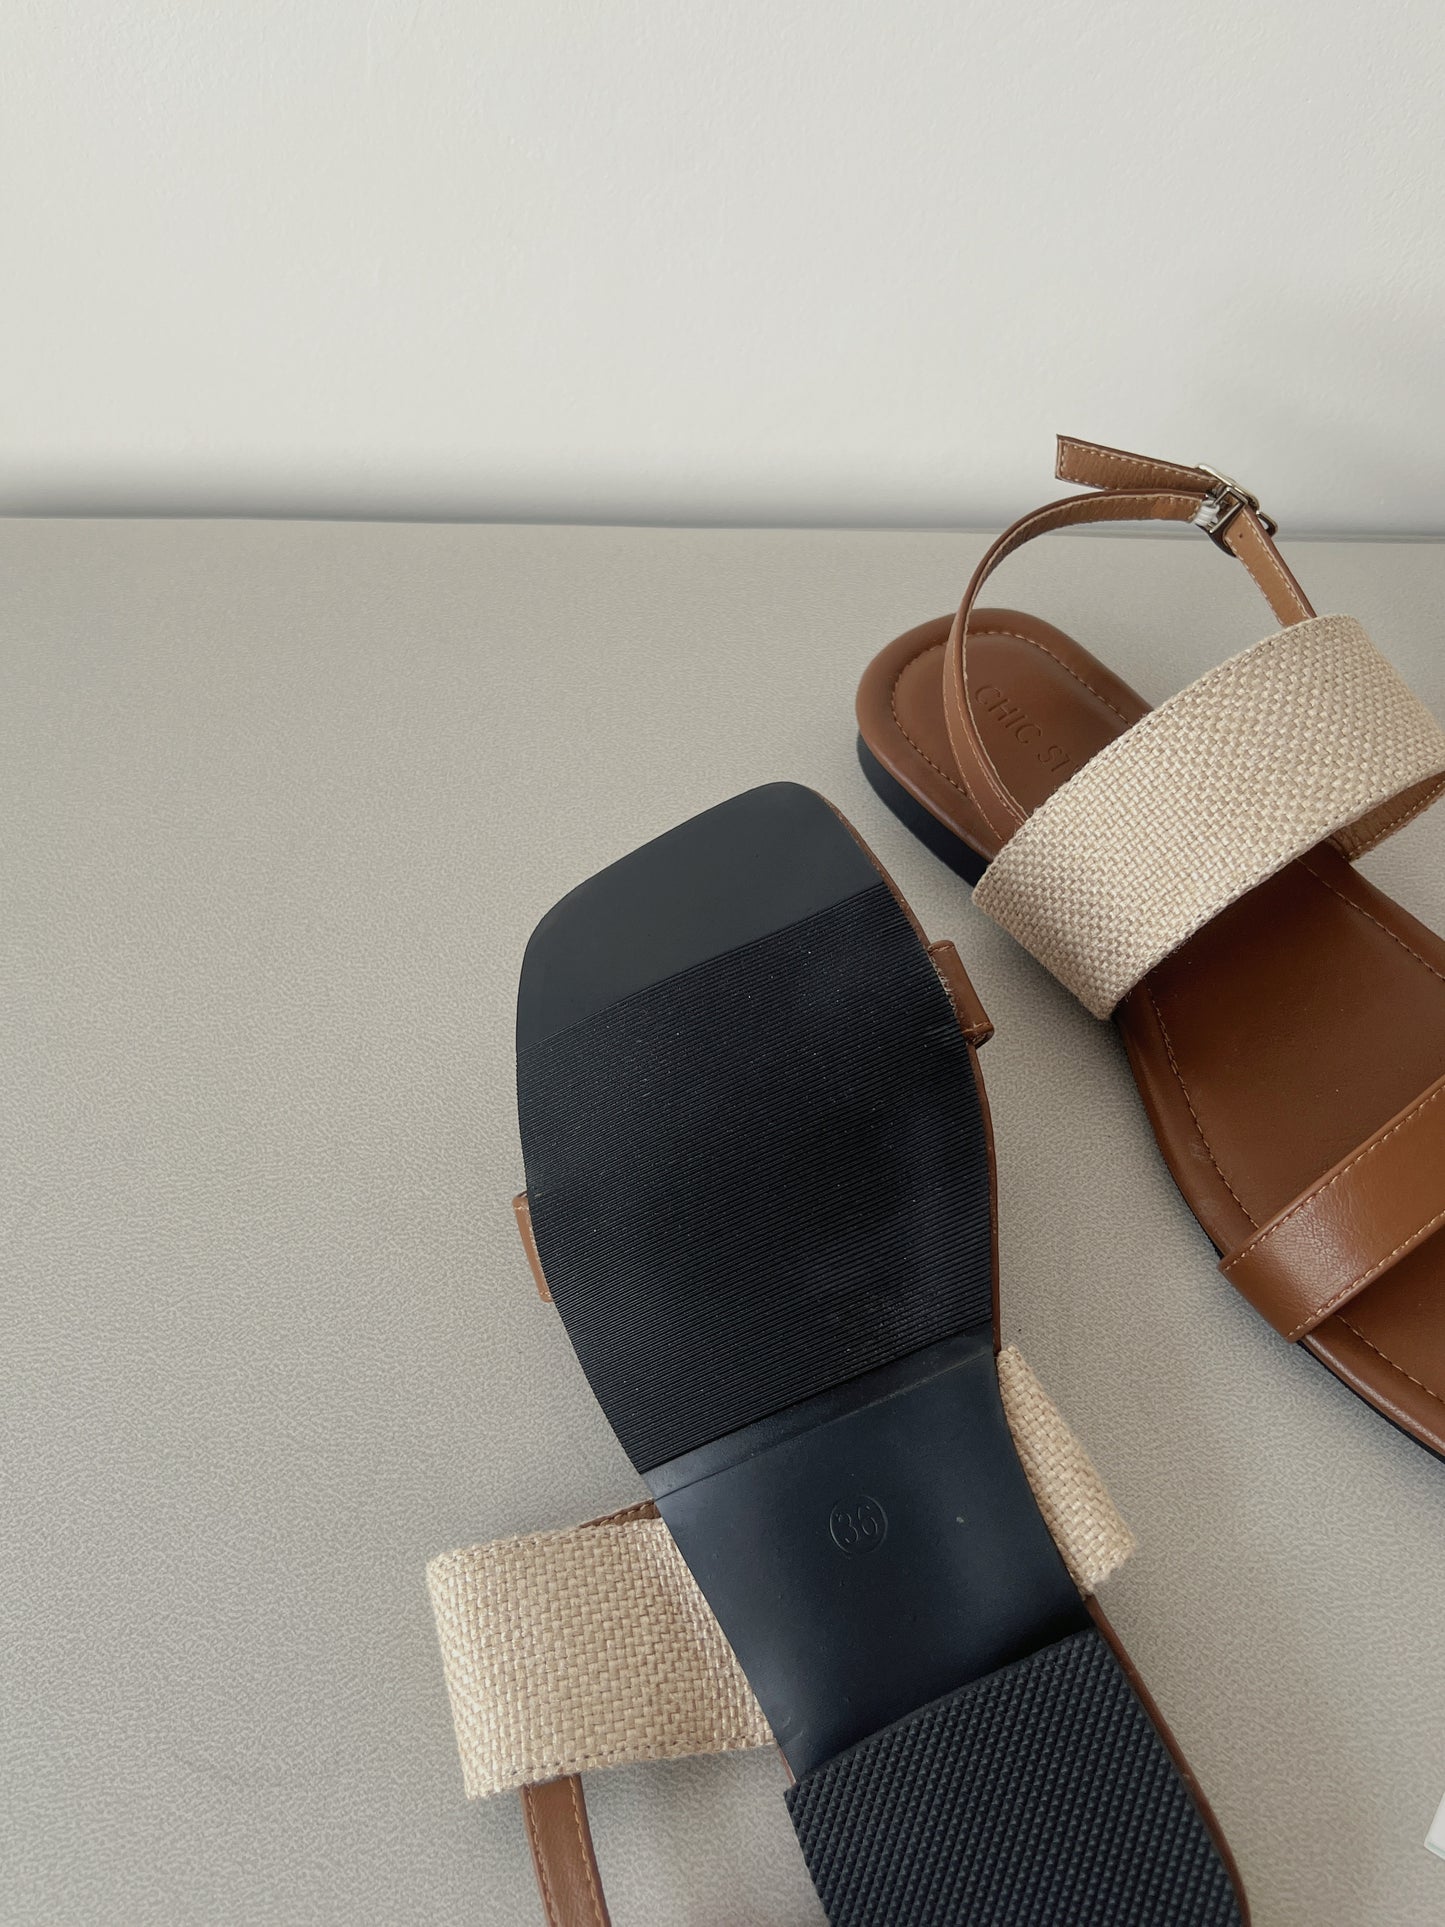 Tiara Roman Style Flat Sandals (Brown)